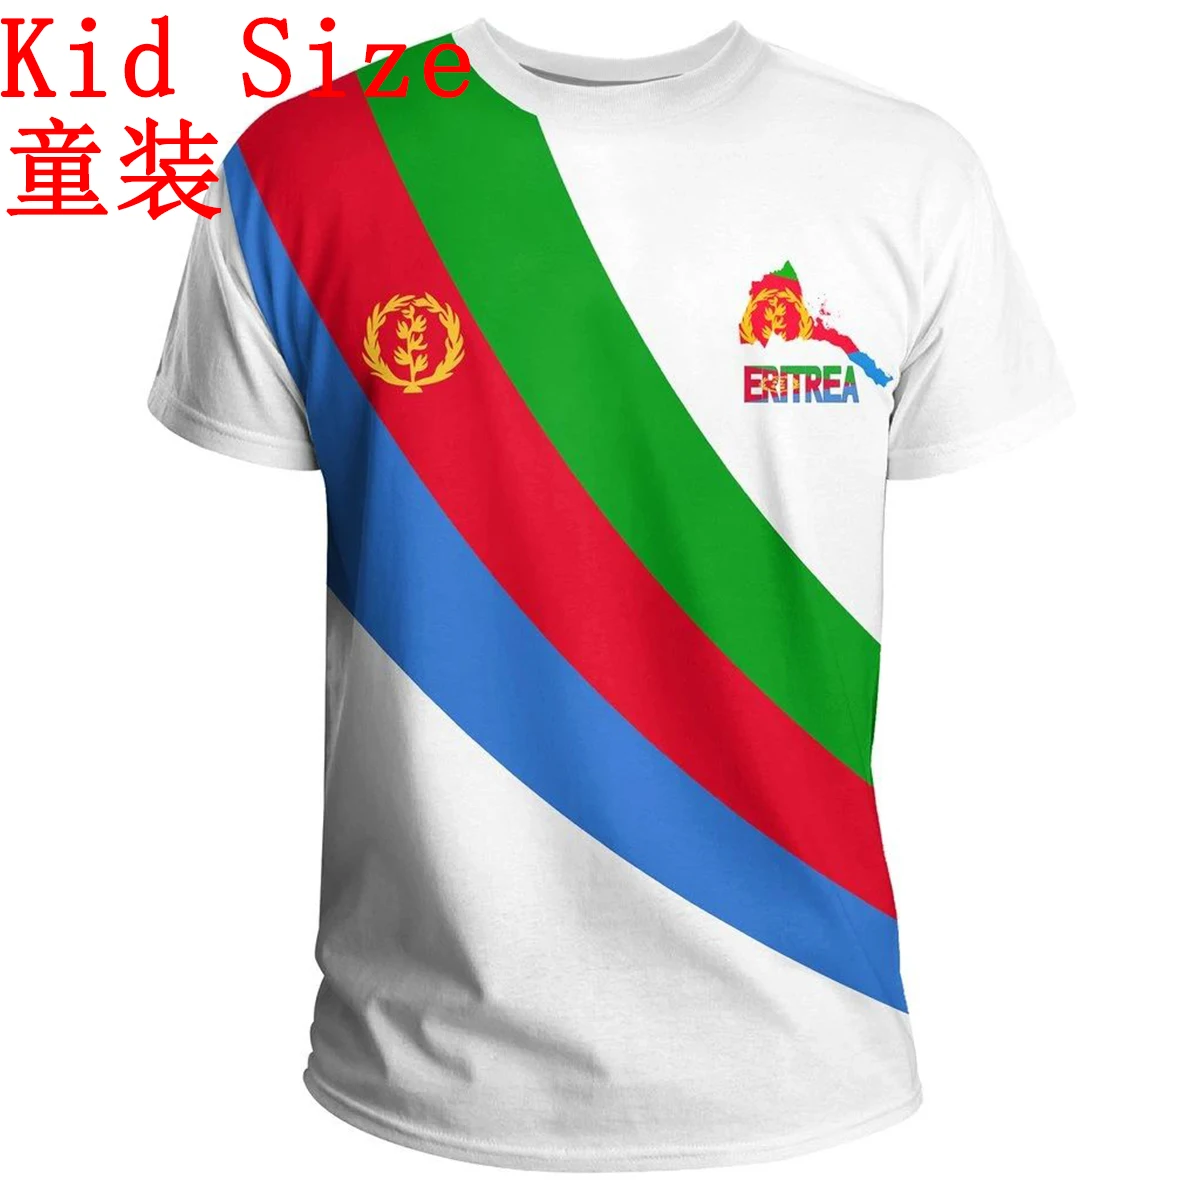 Tessffel Eritrea VIP Link Custom Made Kid Sizes Clothing 3DPrint Men/Women Summer Casual Tee Short Sleeves T-Shirts Streetwear